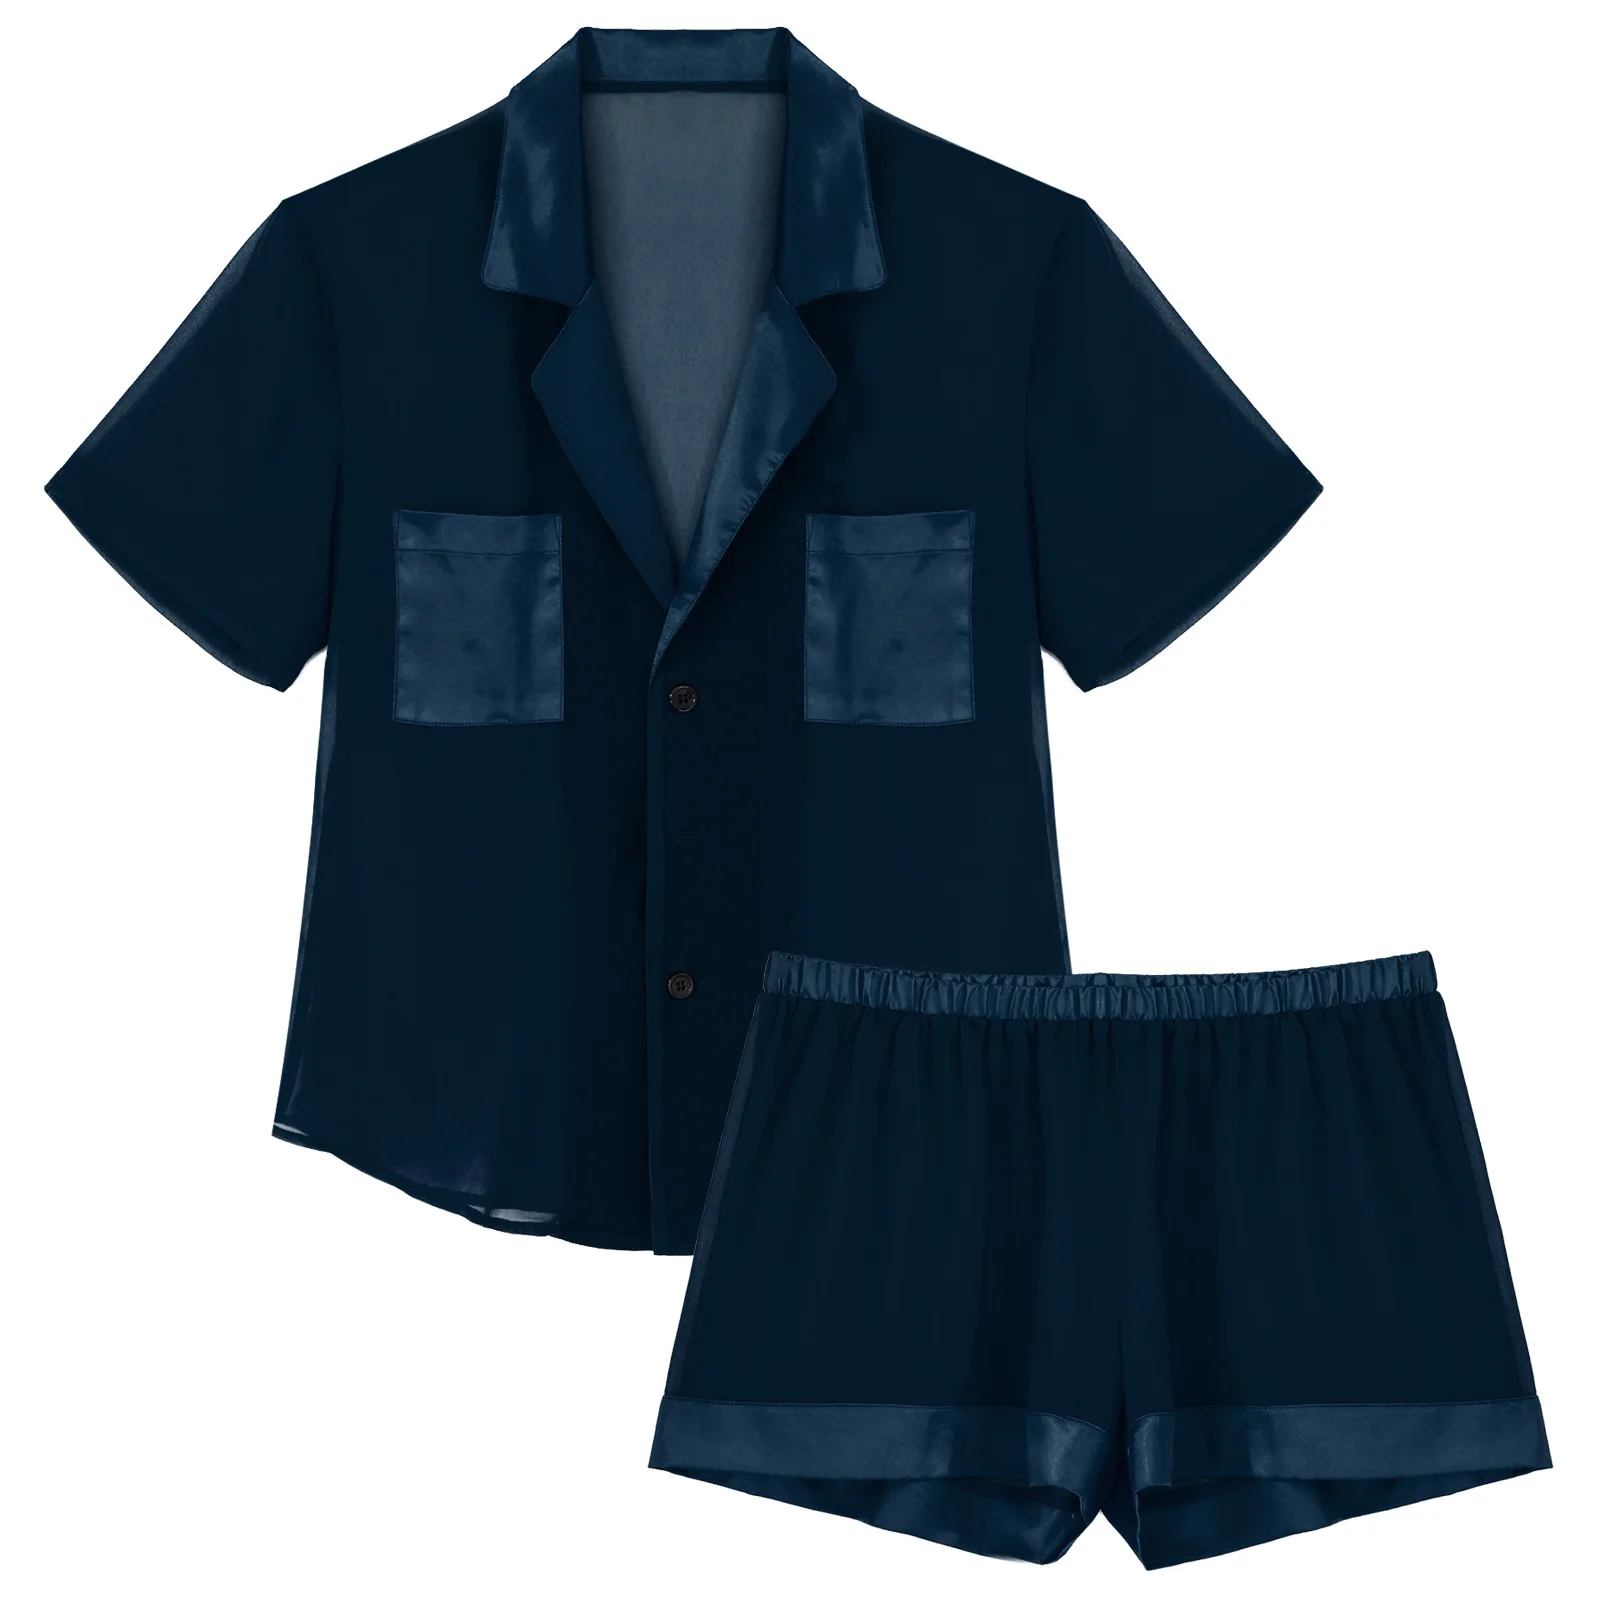 Mens Sleepwear Suit Homewear Satin Patchwork Sissy Nightwear See-through Pajama Set Lapel Short Sleeve Button Tops with Shorts mens cotton pajama shorts